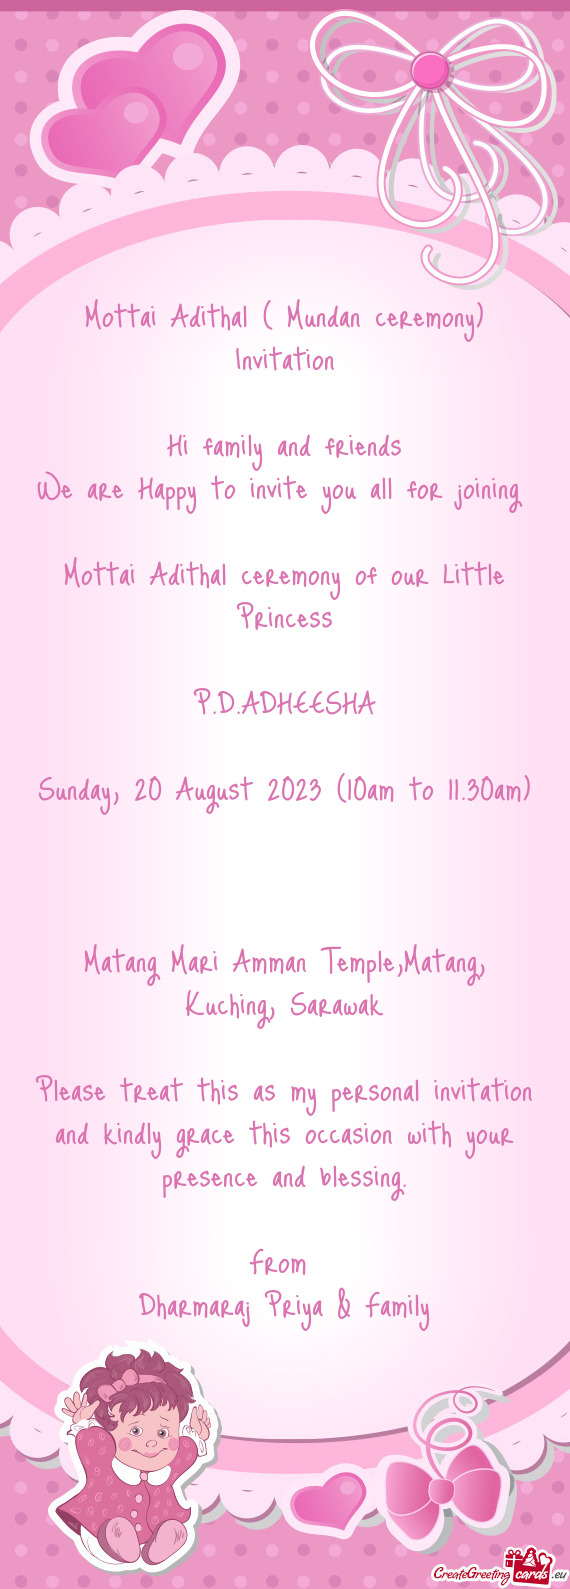 Mottai Adithal ( Mundan ceremony) Invitation